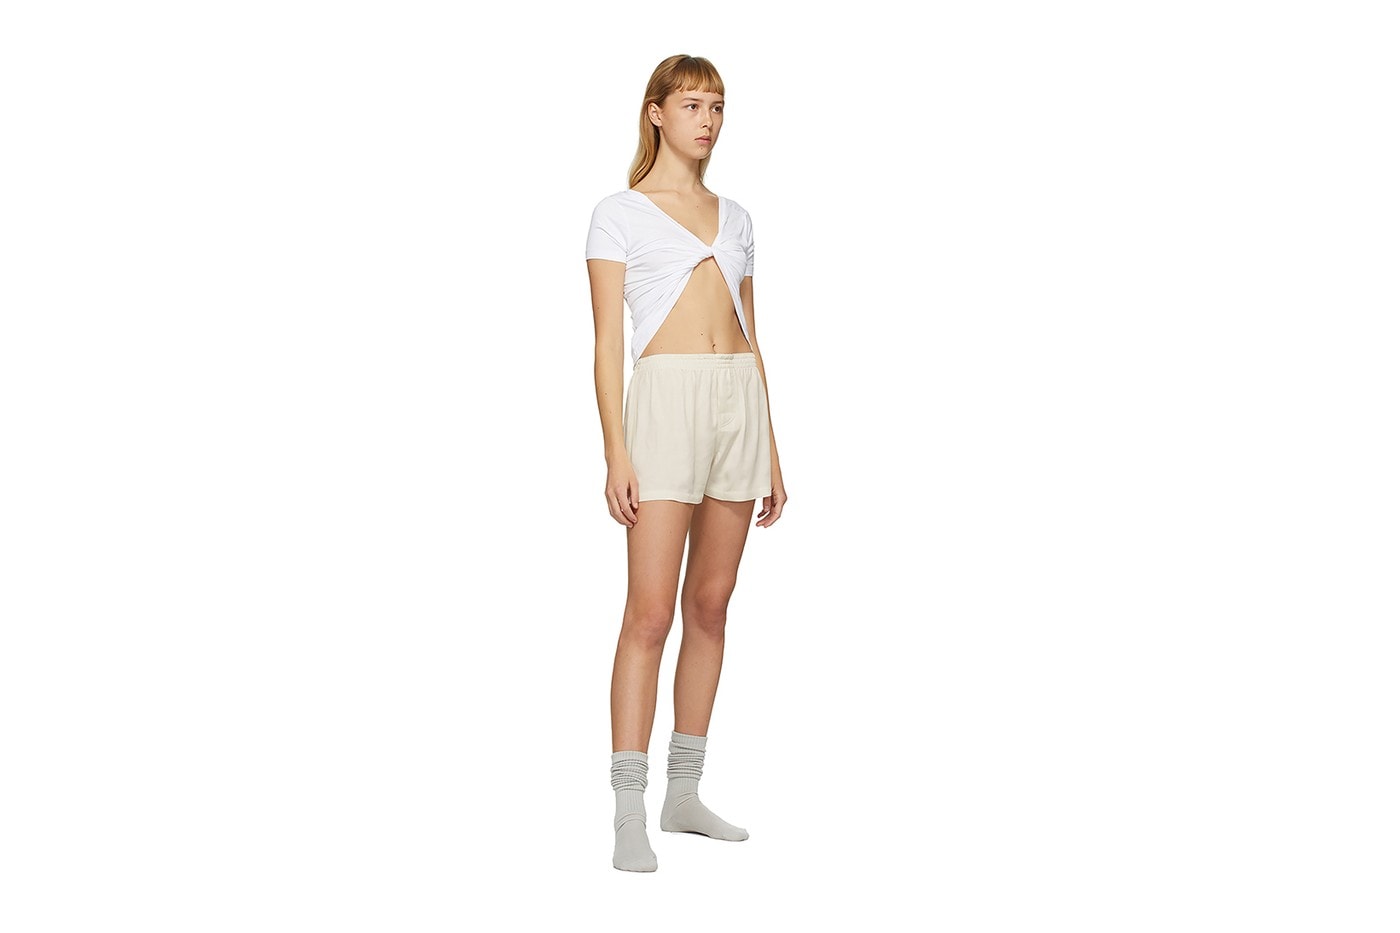 jacquemus loungewear capsule collection shirt bra shorts ssense online release